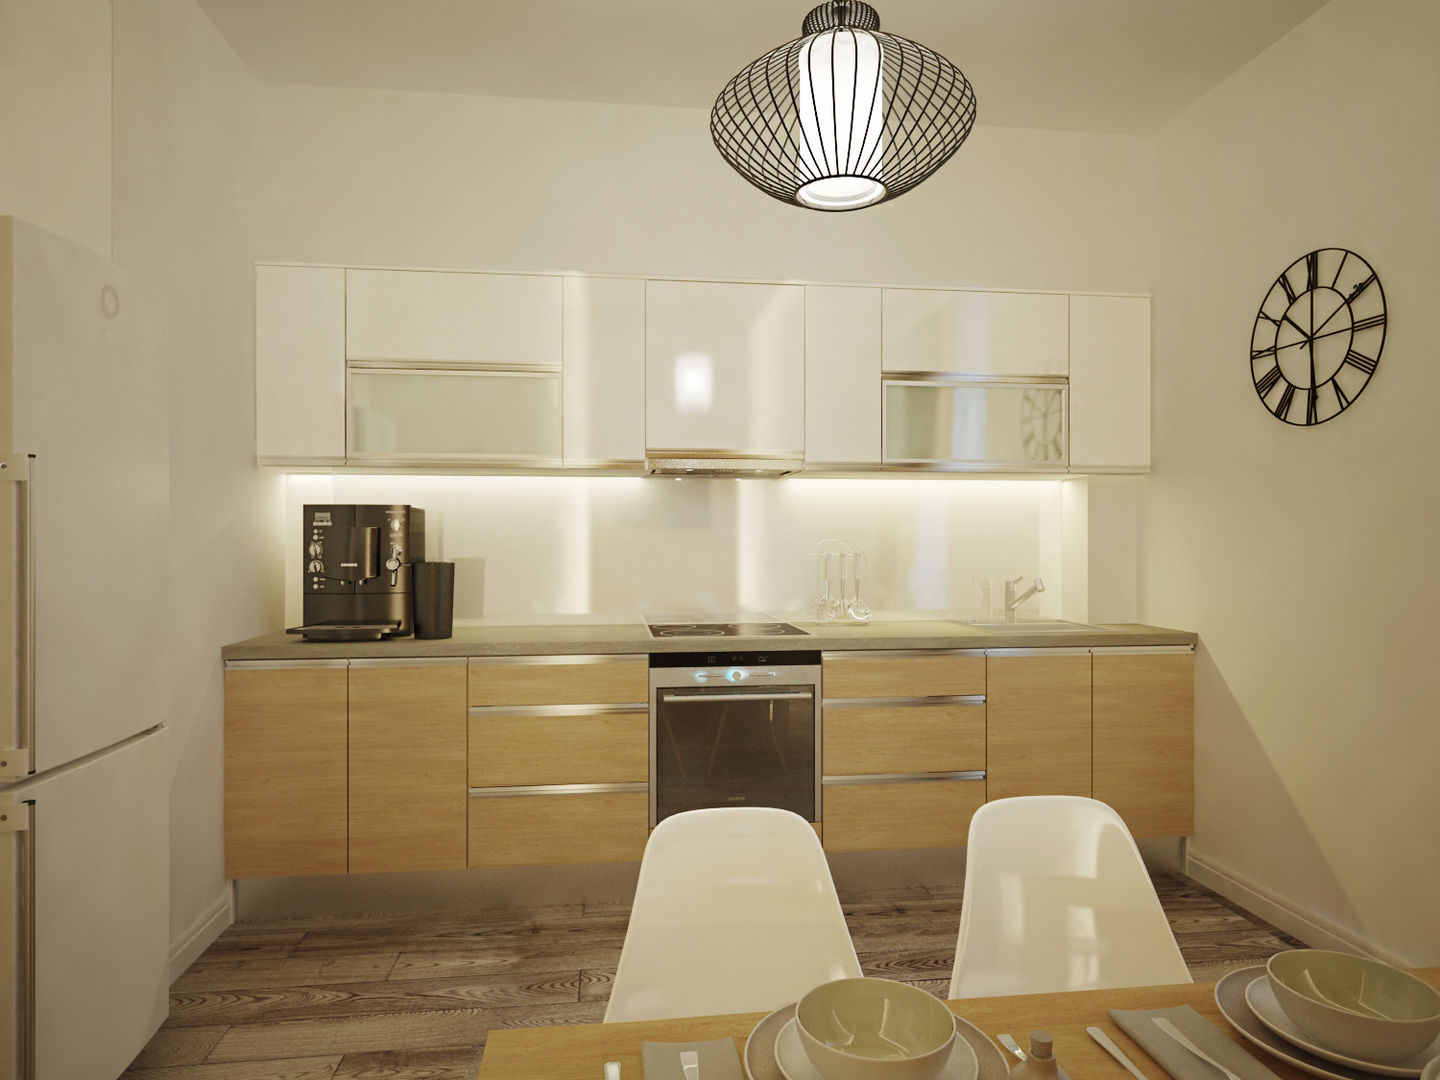 Квартира в современном минимализме, Polovets design studio Polovets design studio Kitchen